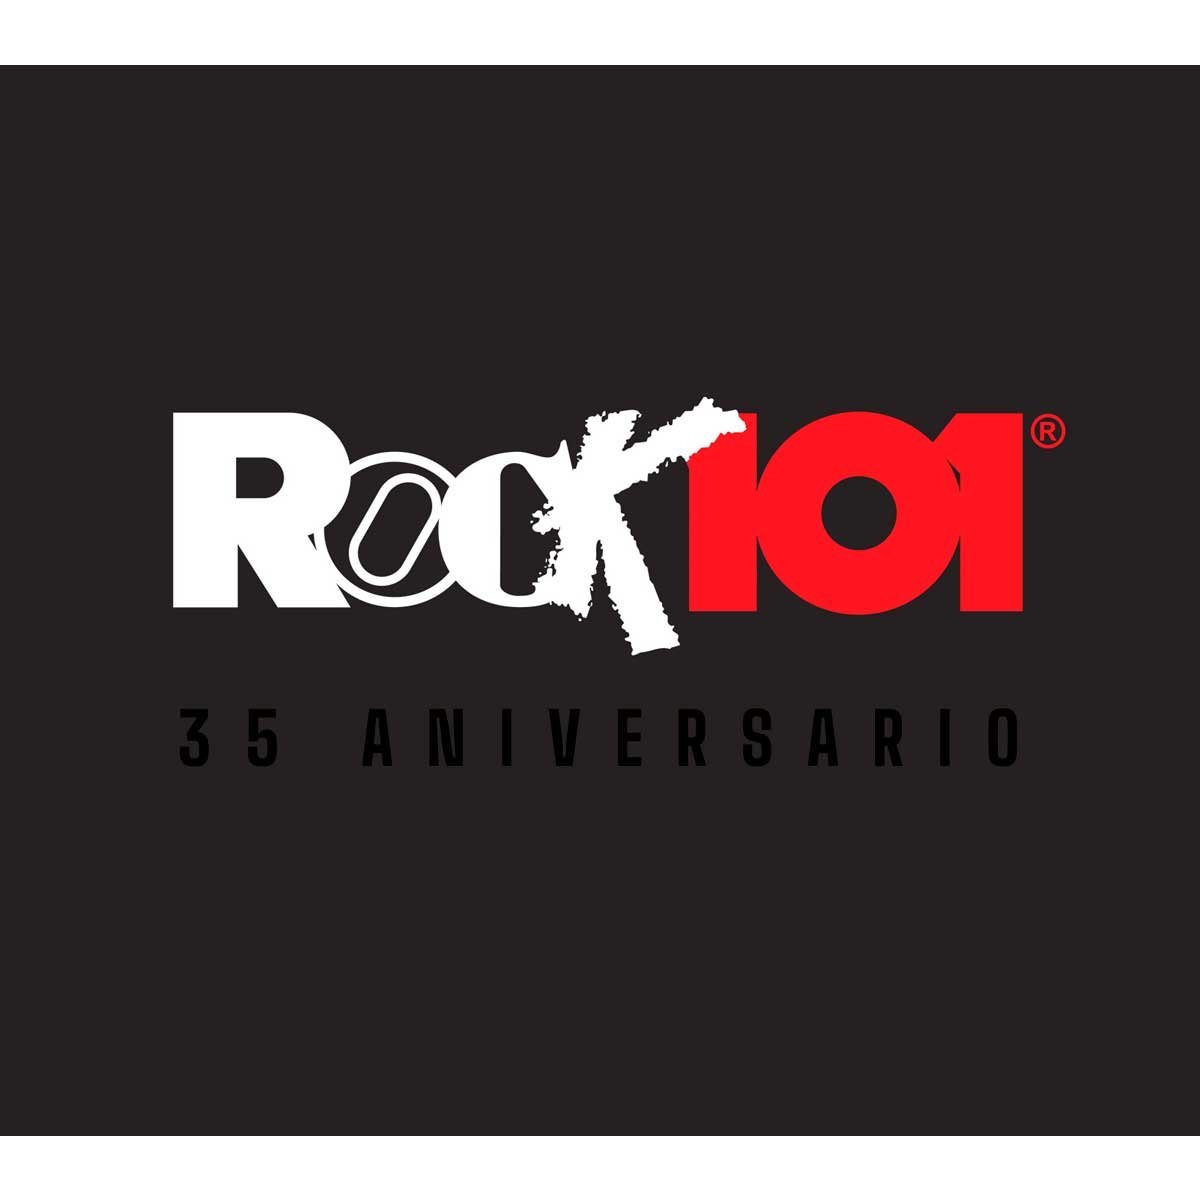 2Cd's Rock 101, 35 Aniversario